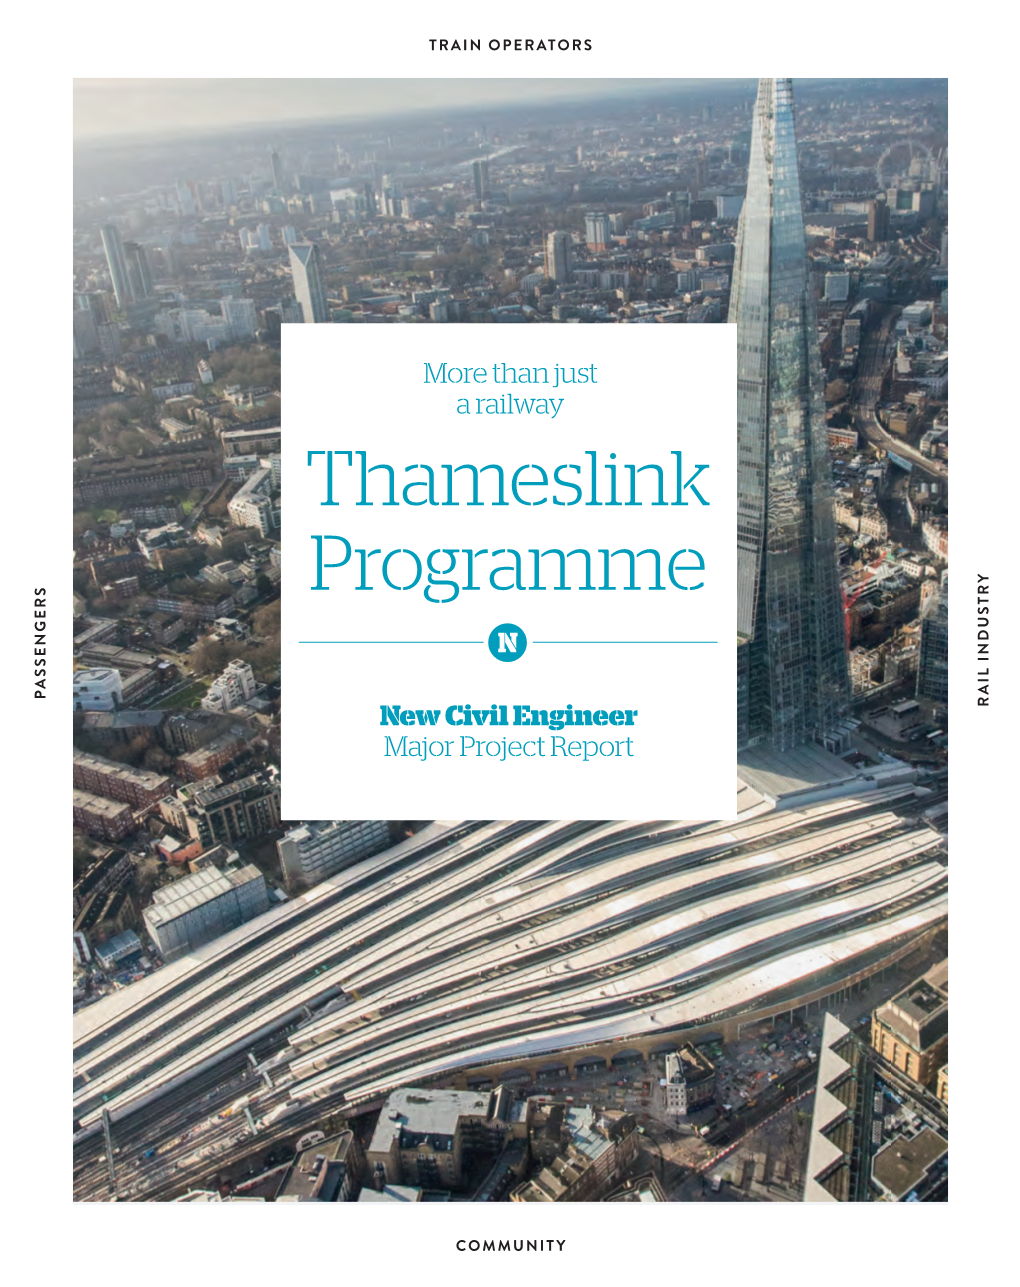 Thameslink Programme PASSENGERS New Civil Engineer INDUSTRY RAIL Major Project Report